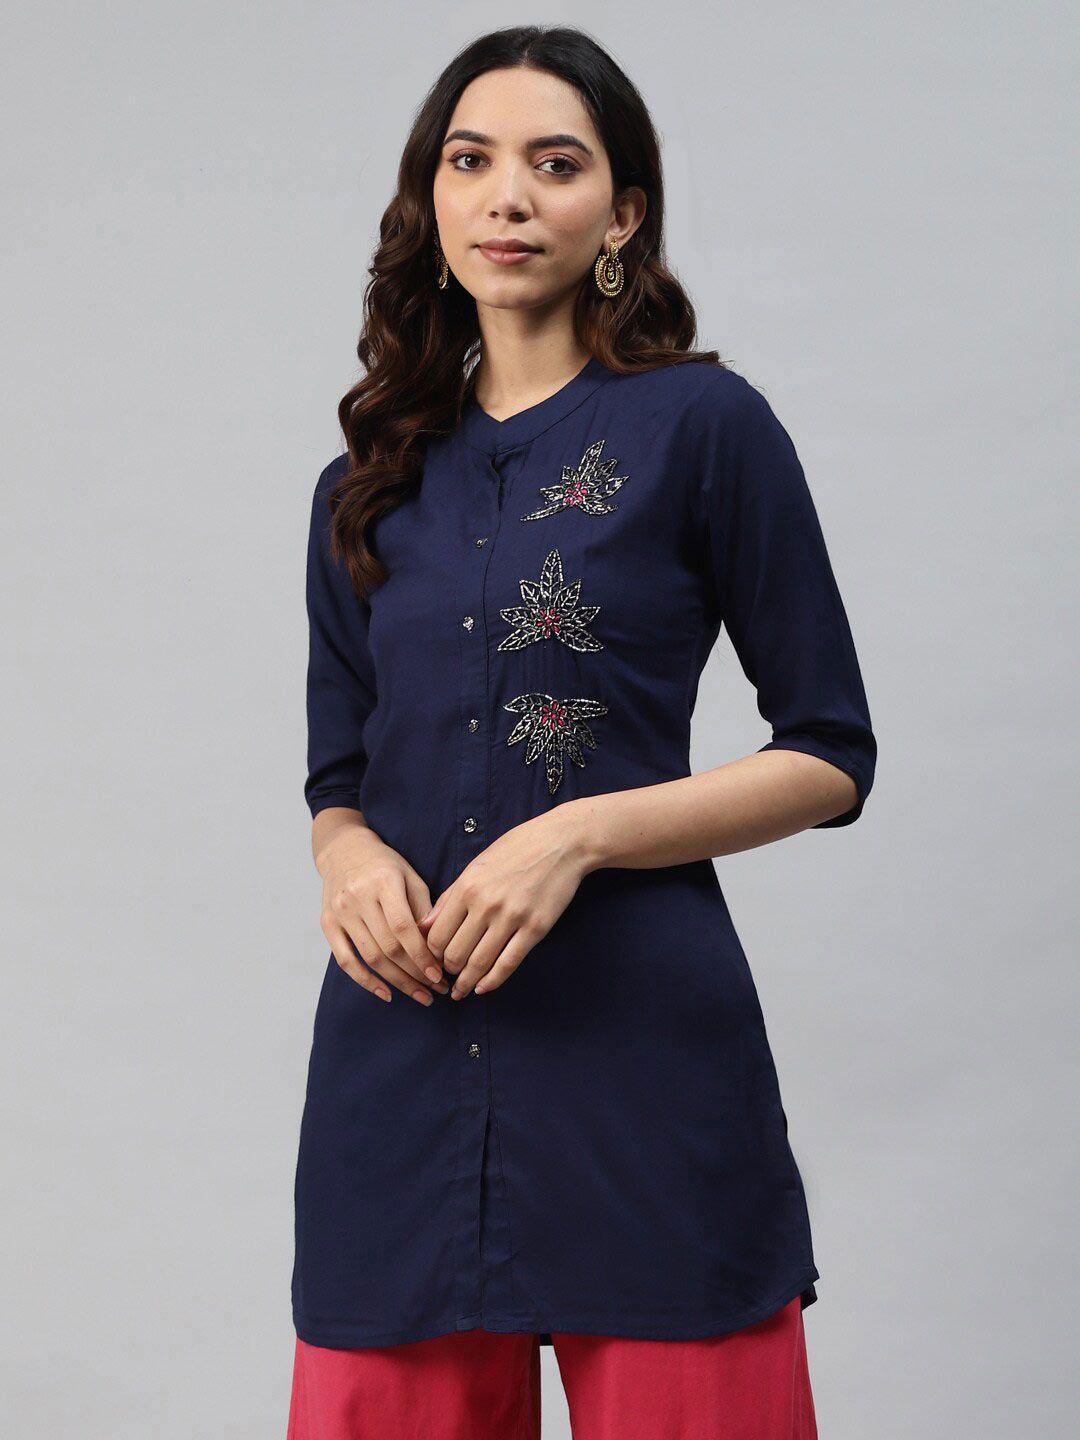 jc4u embellished mandarin collar shirt style longline top